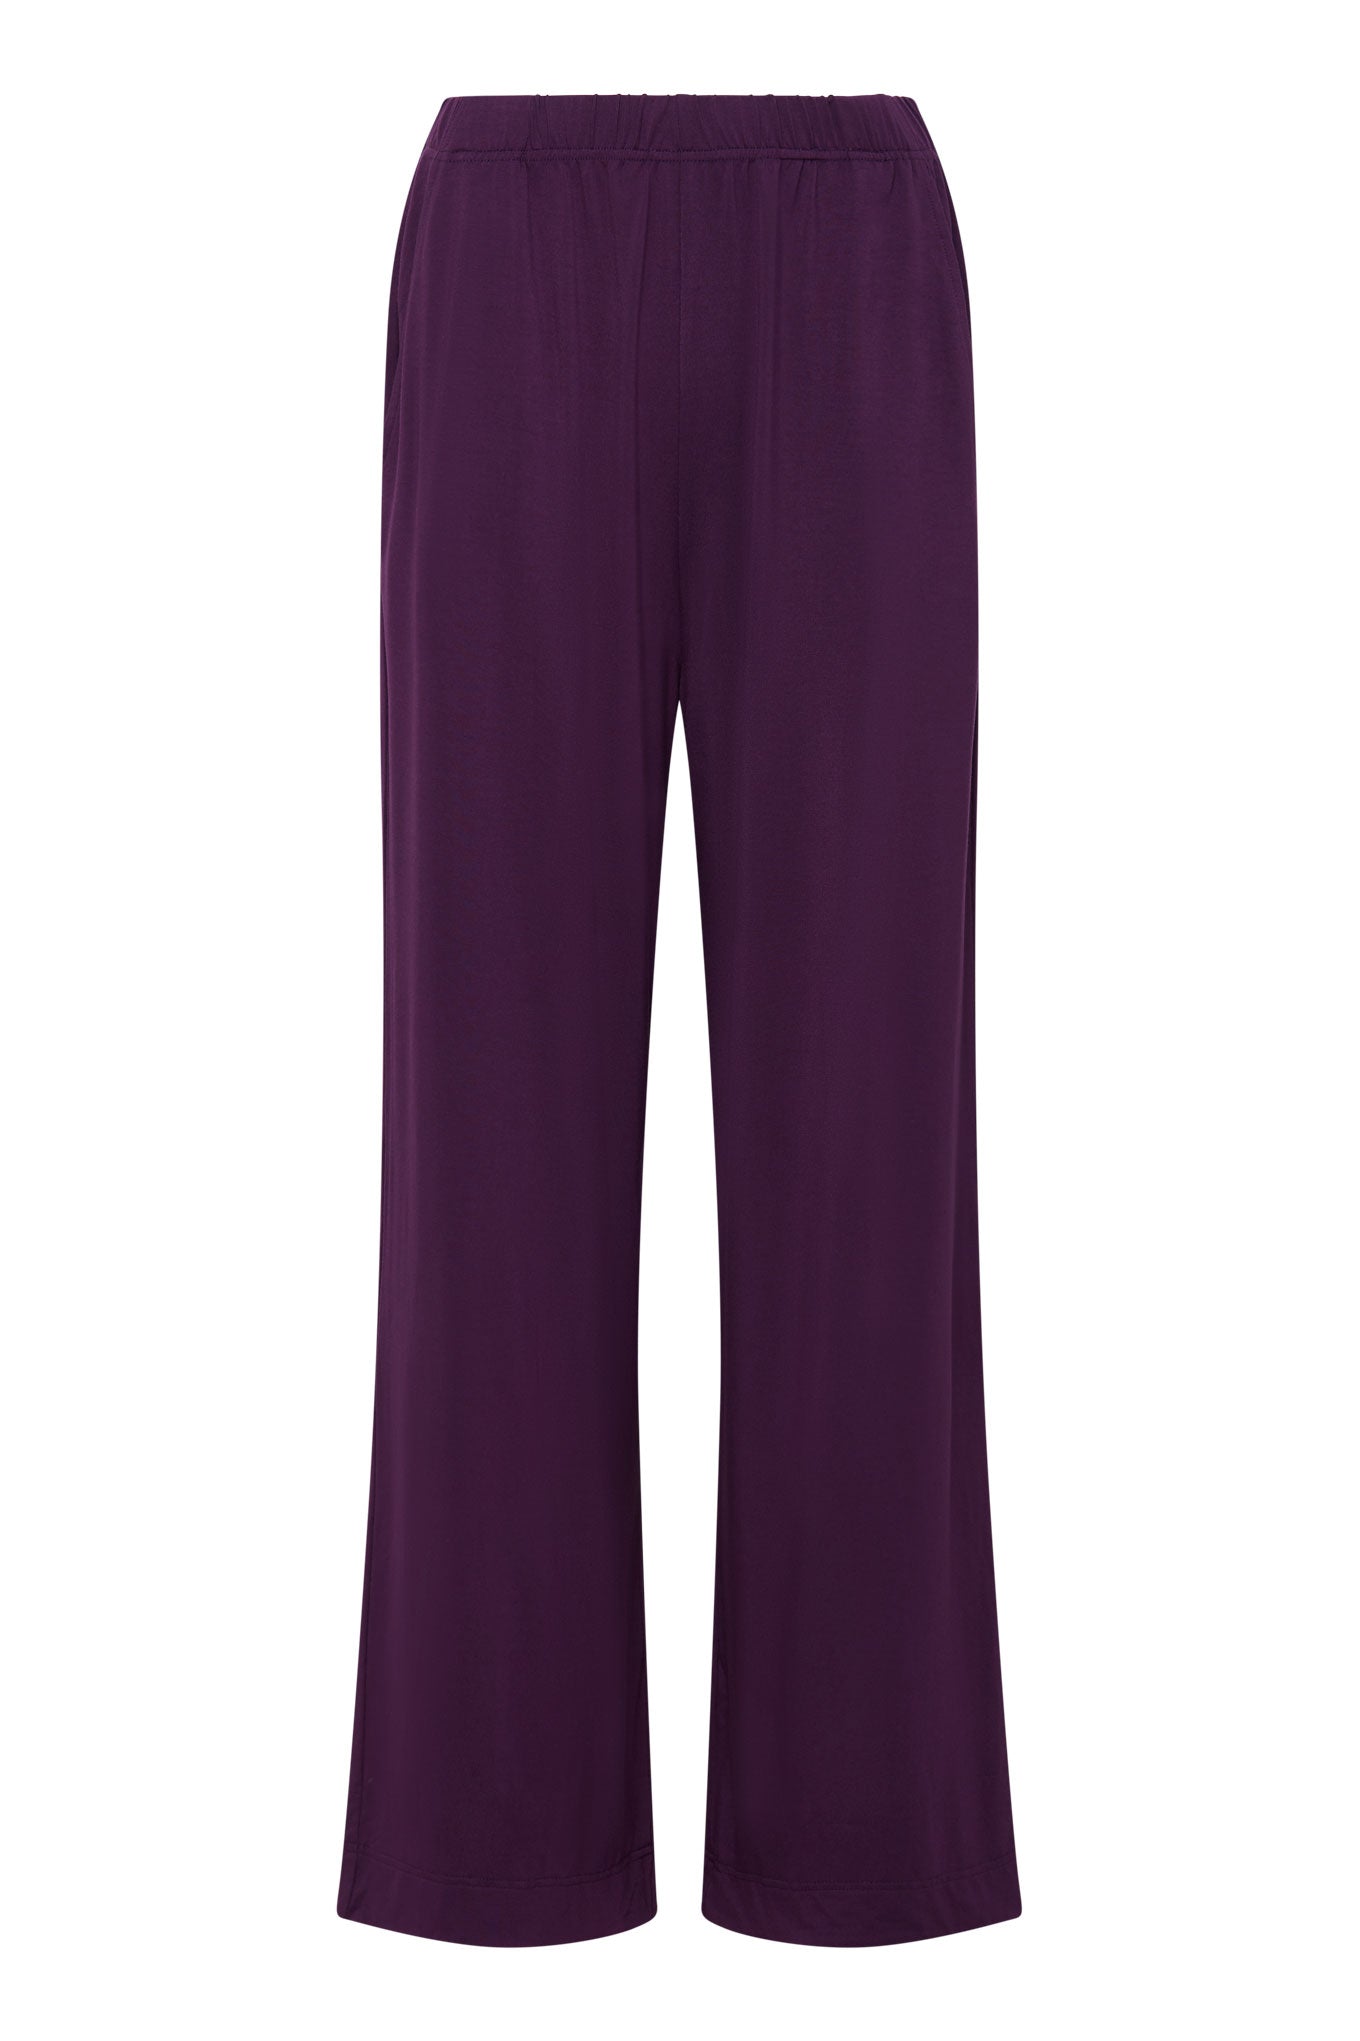 Mauve colored trousers BINITA made of modal by Komodo